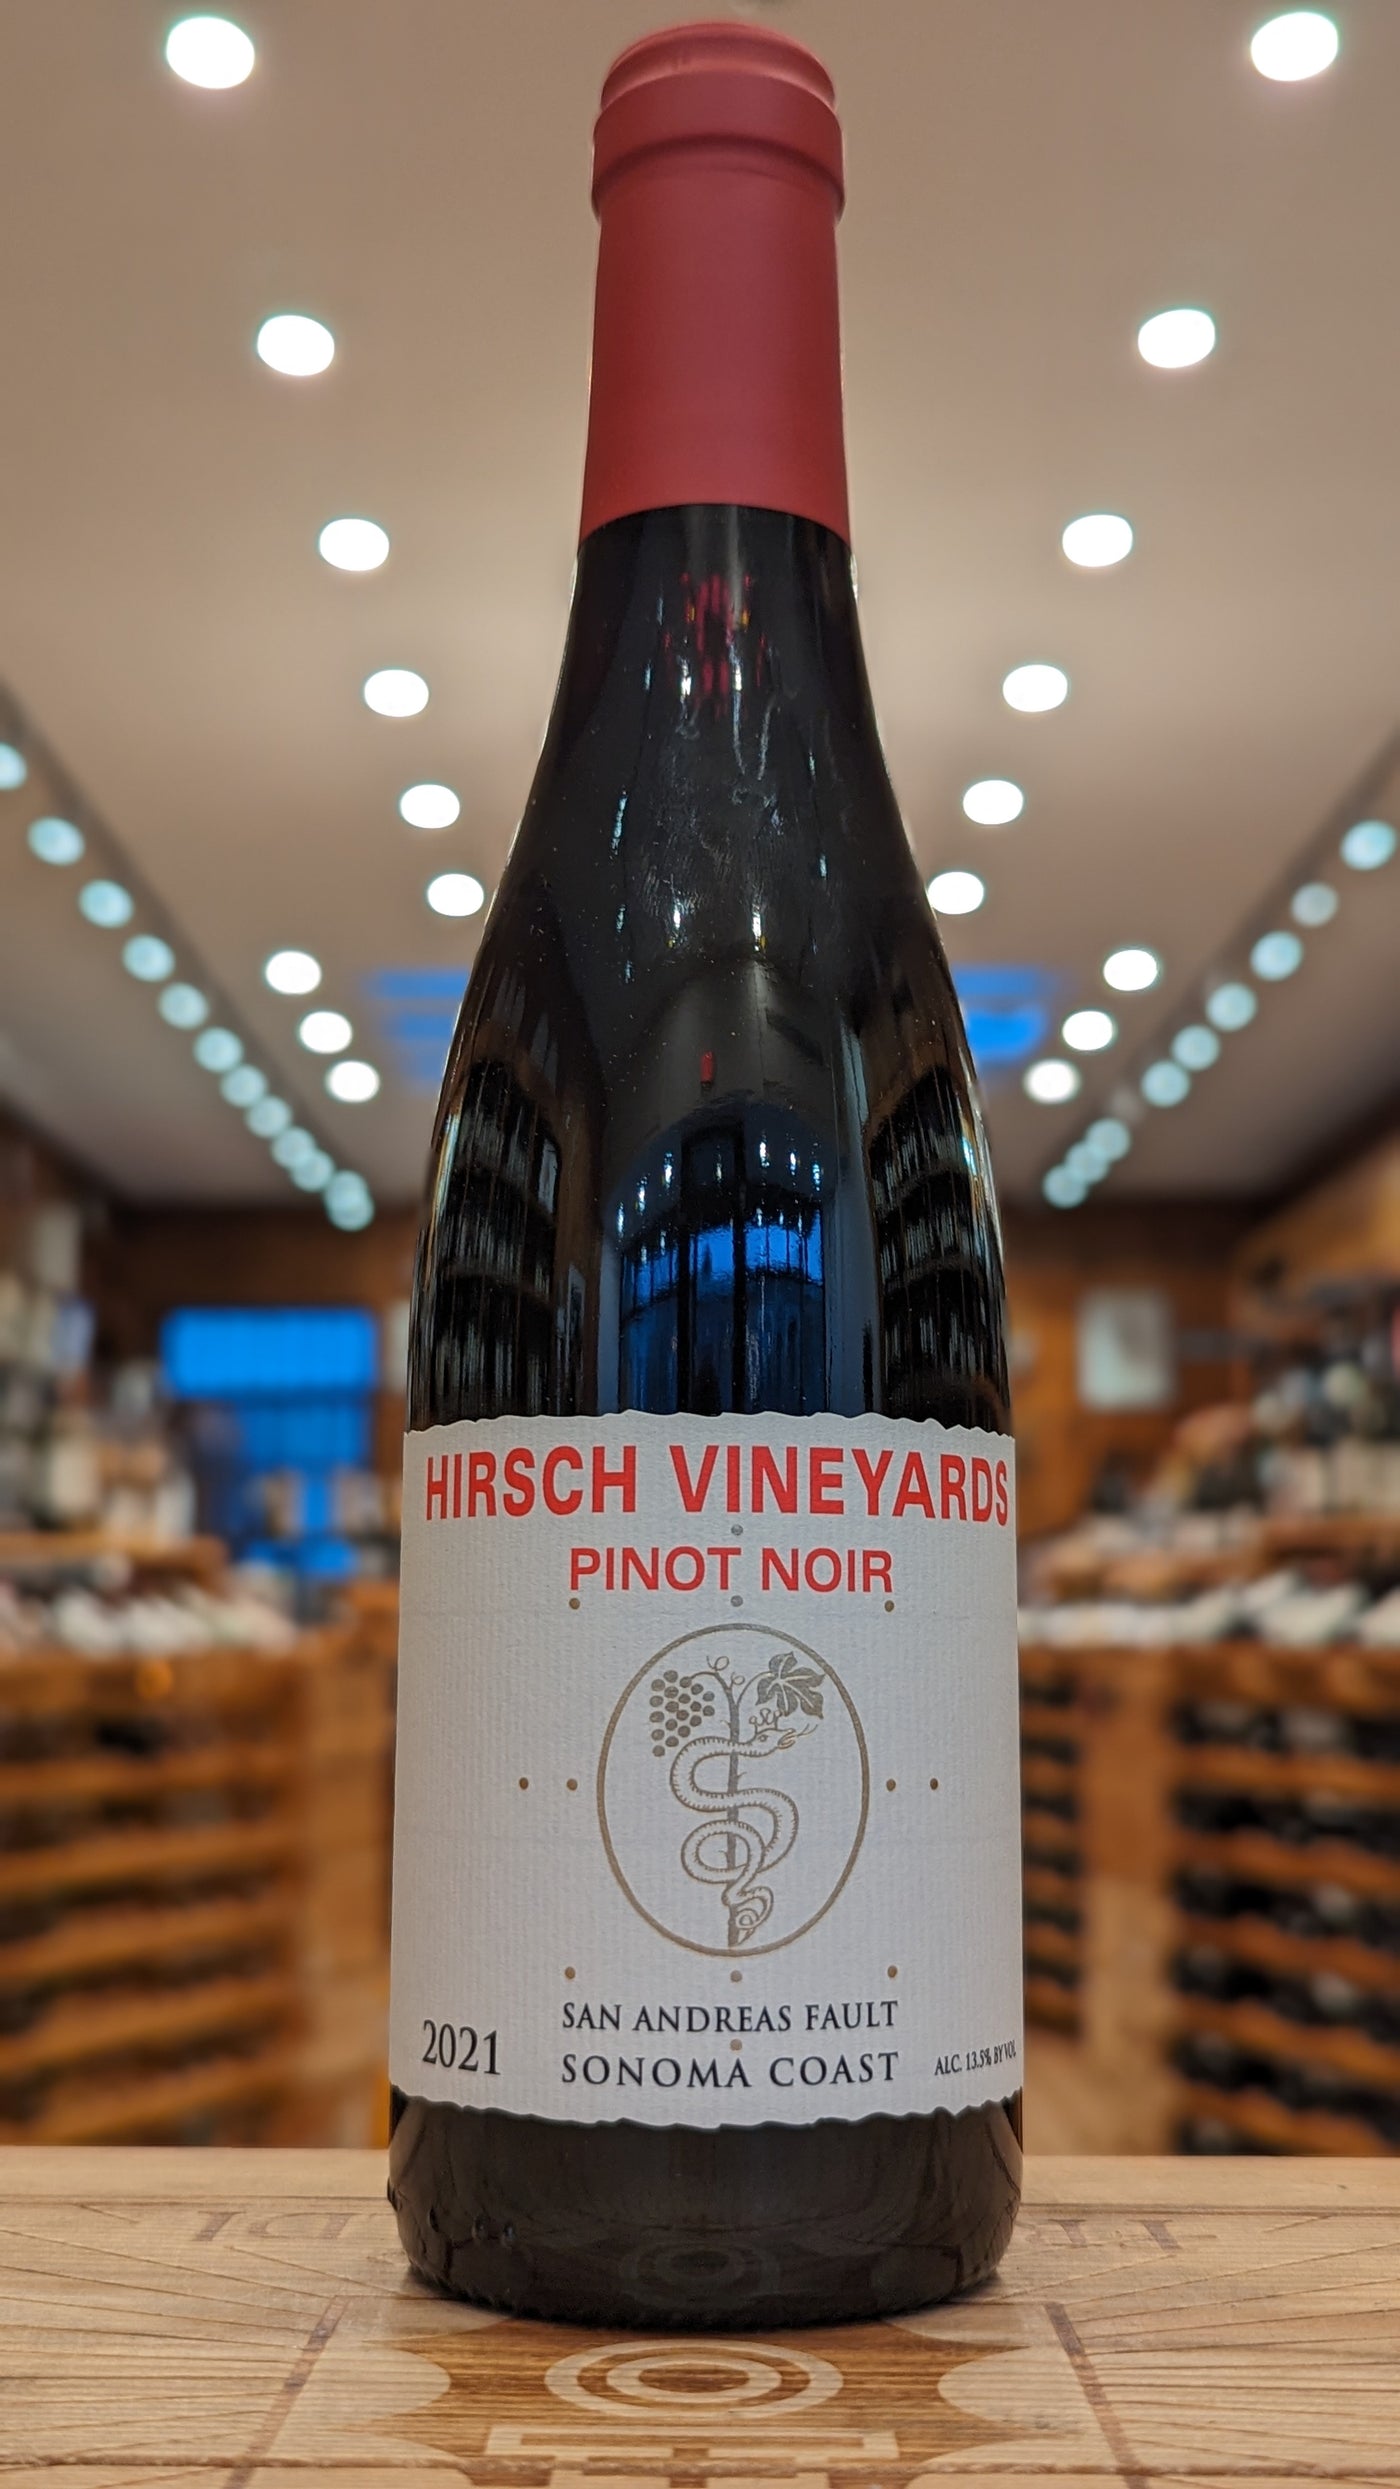 Hirsch San Andreas Fault S. Coast Pinot Noir 2021 375ml